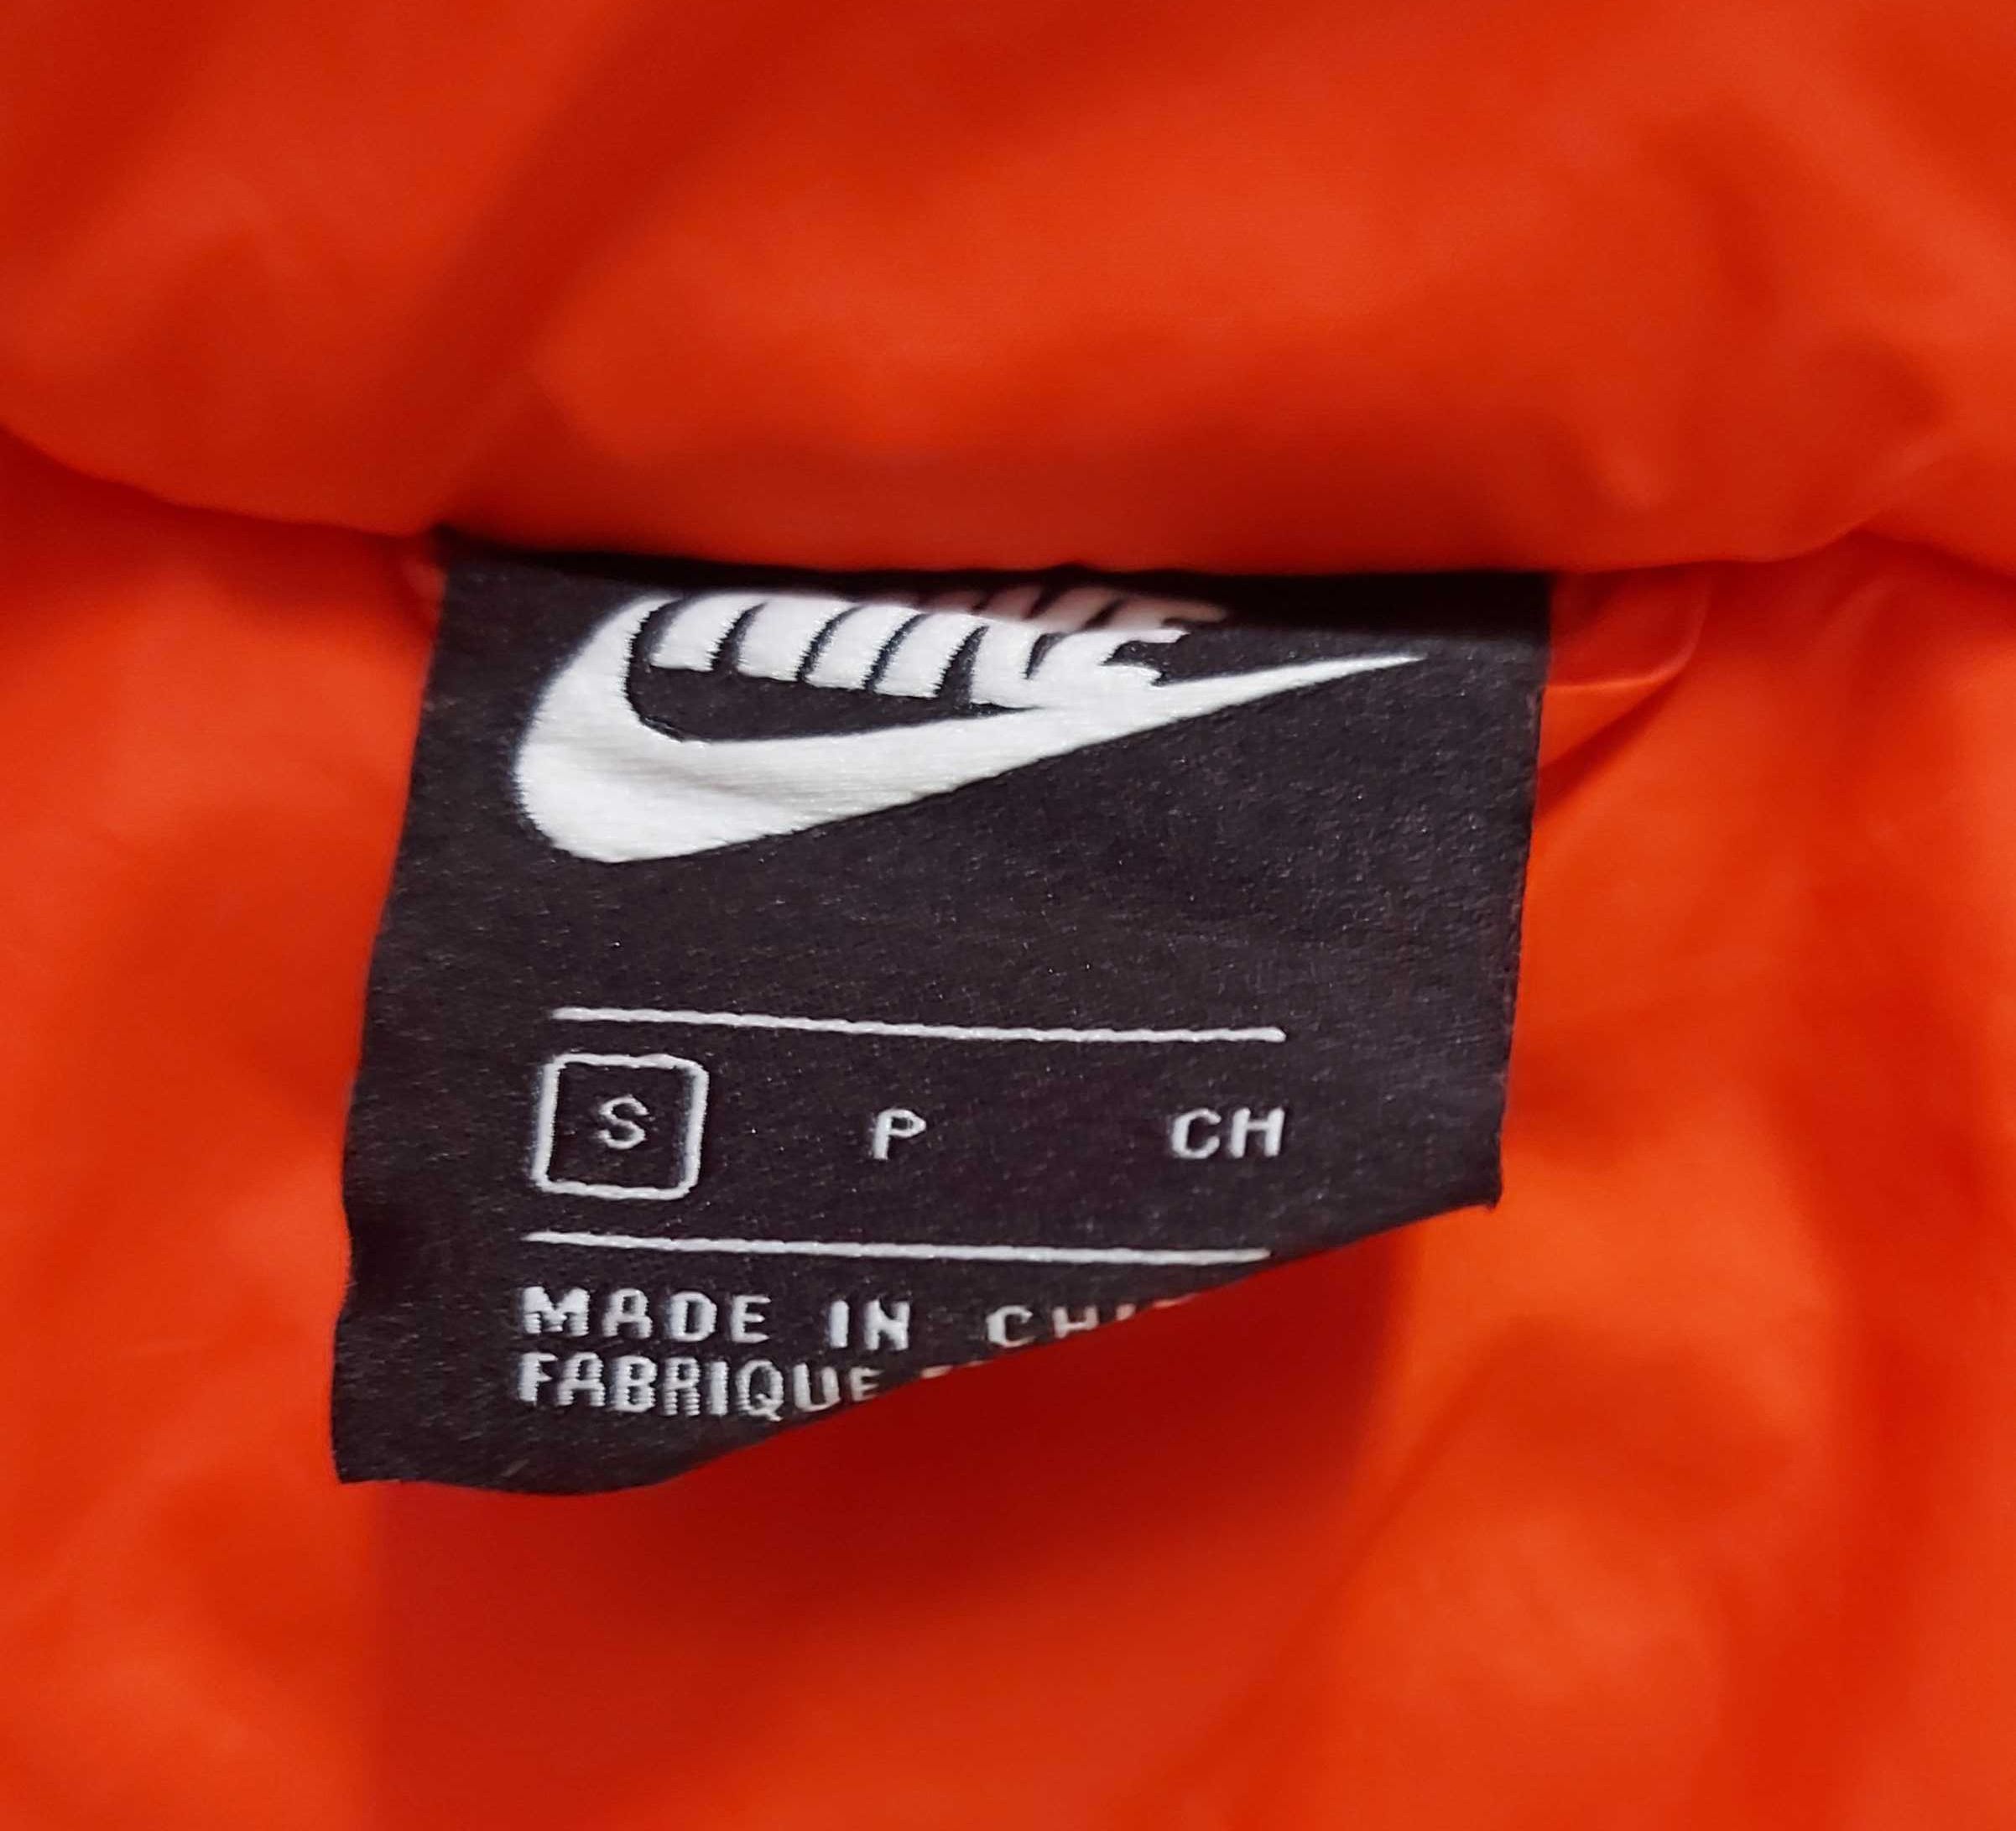 Дамско яке Nike , размер S/38, оранжево , дълго , зимно термофибри